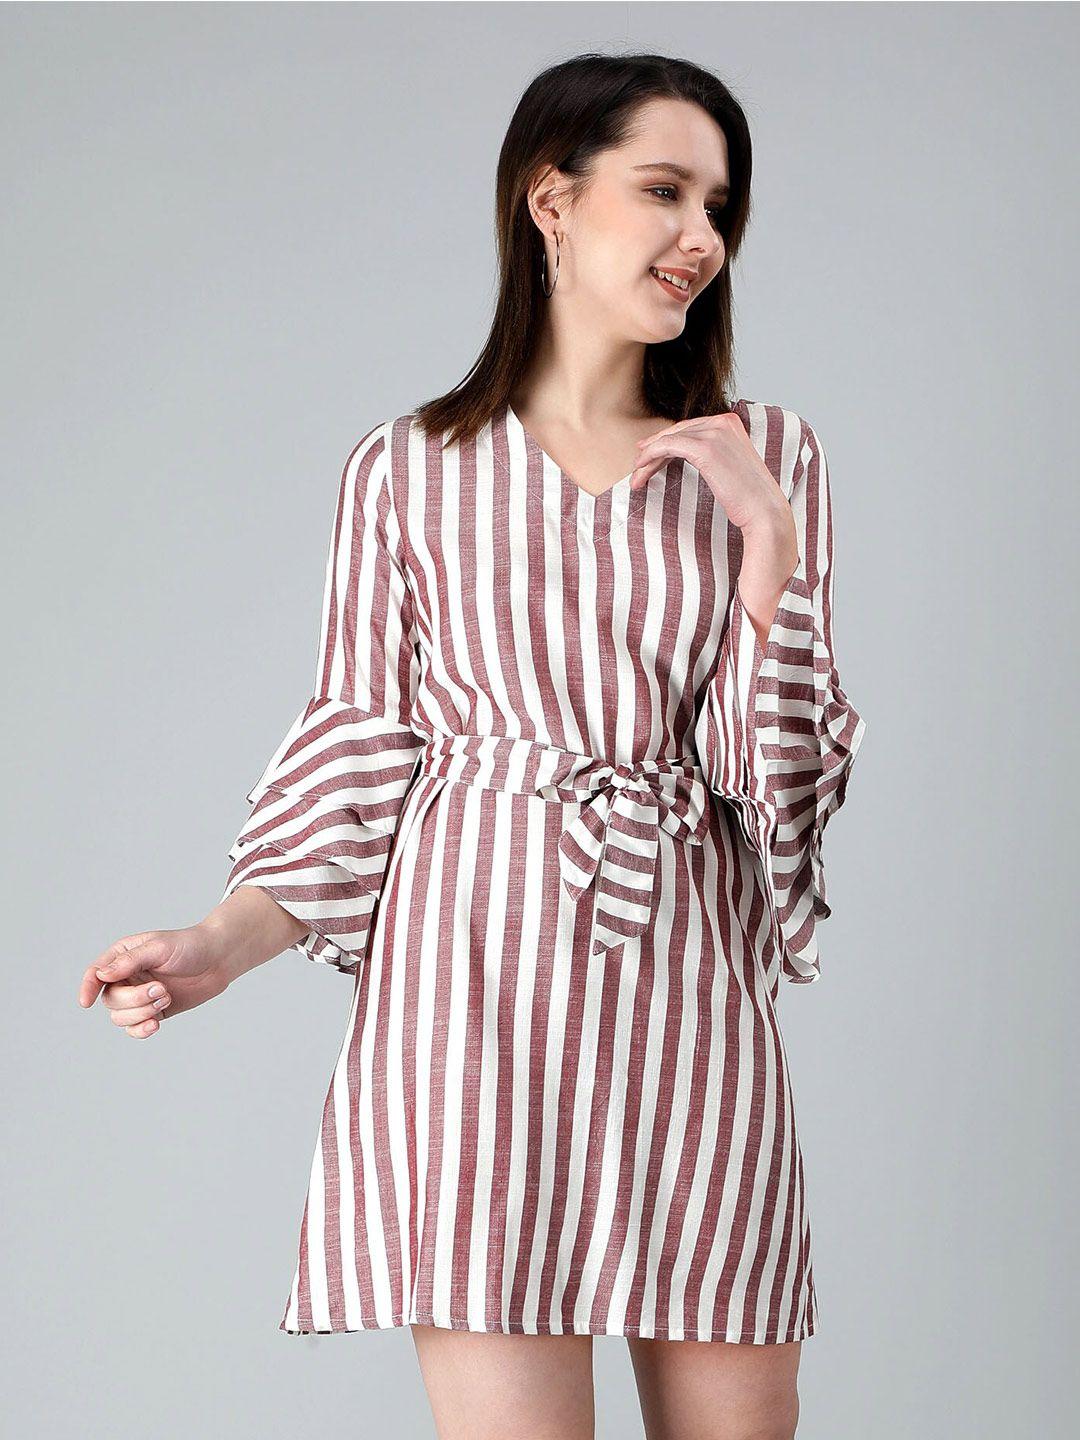 misbis-striped-a-line-cotton-dress